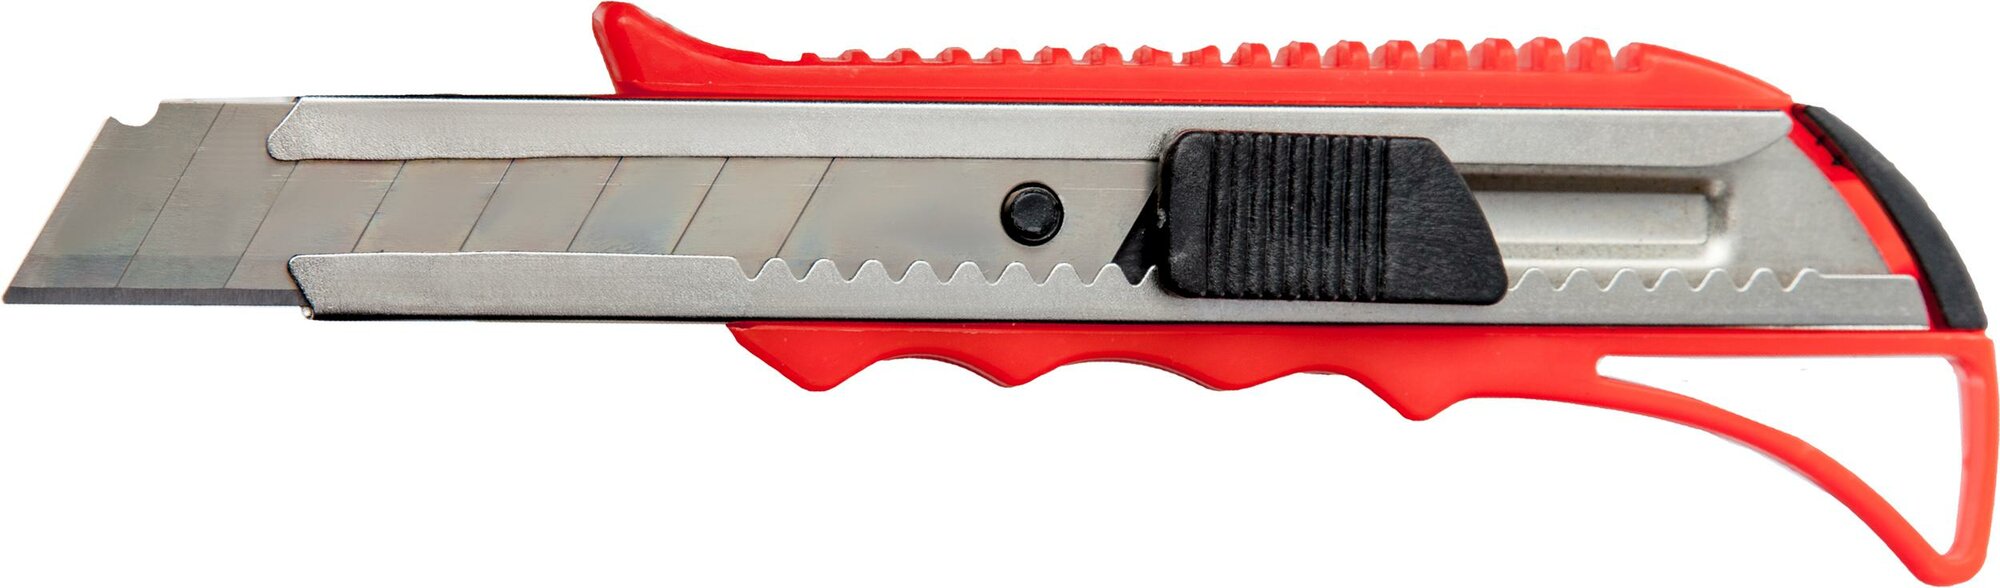 Нож канцелярский 18мм Attache с фиксатором и металлическими направляющими